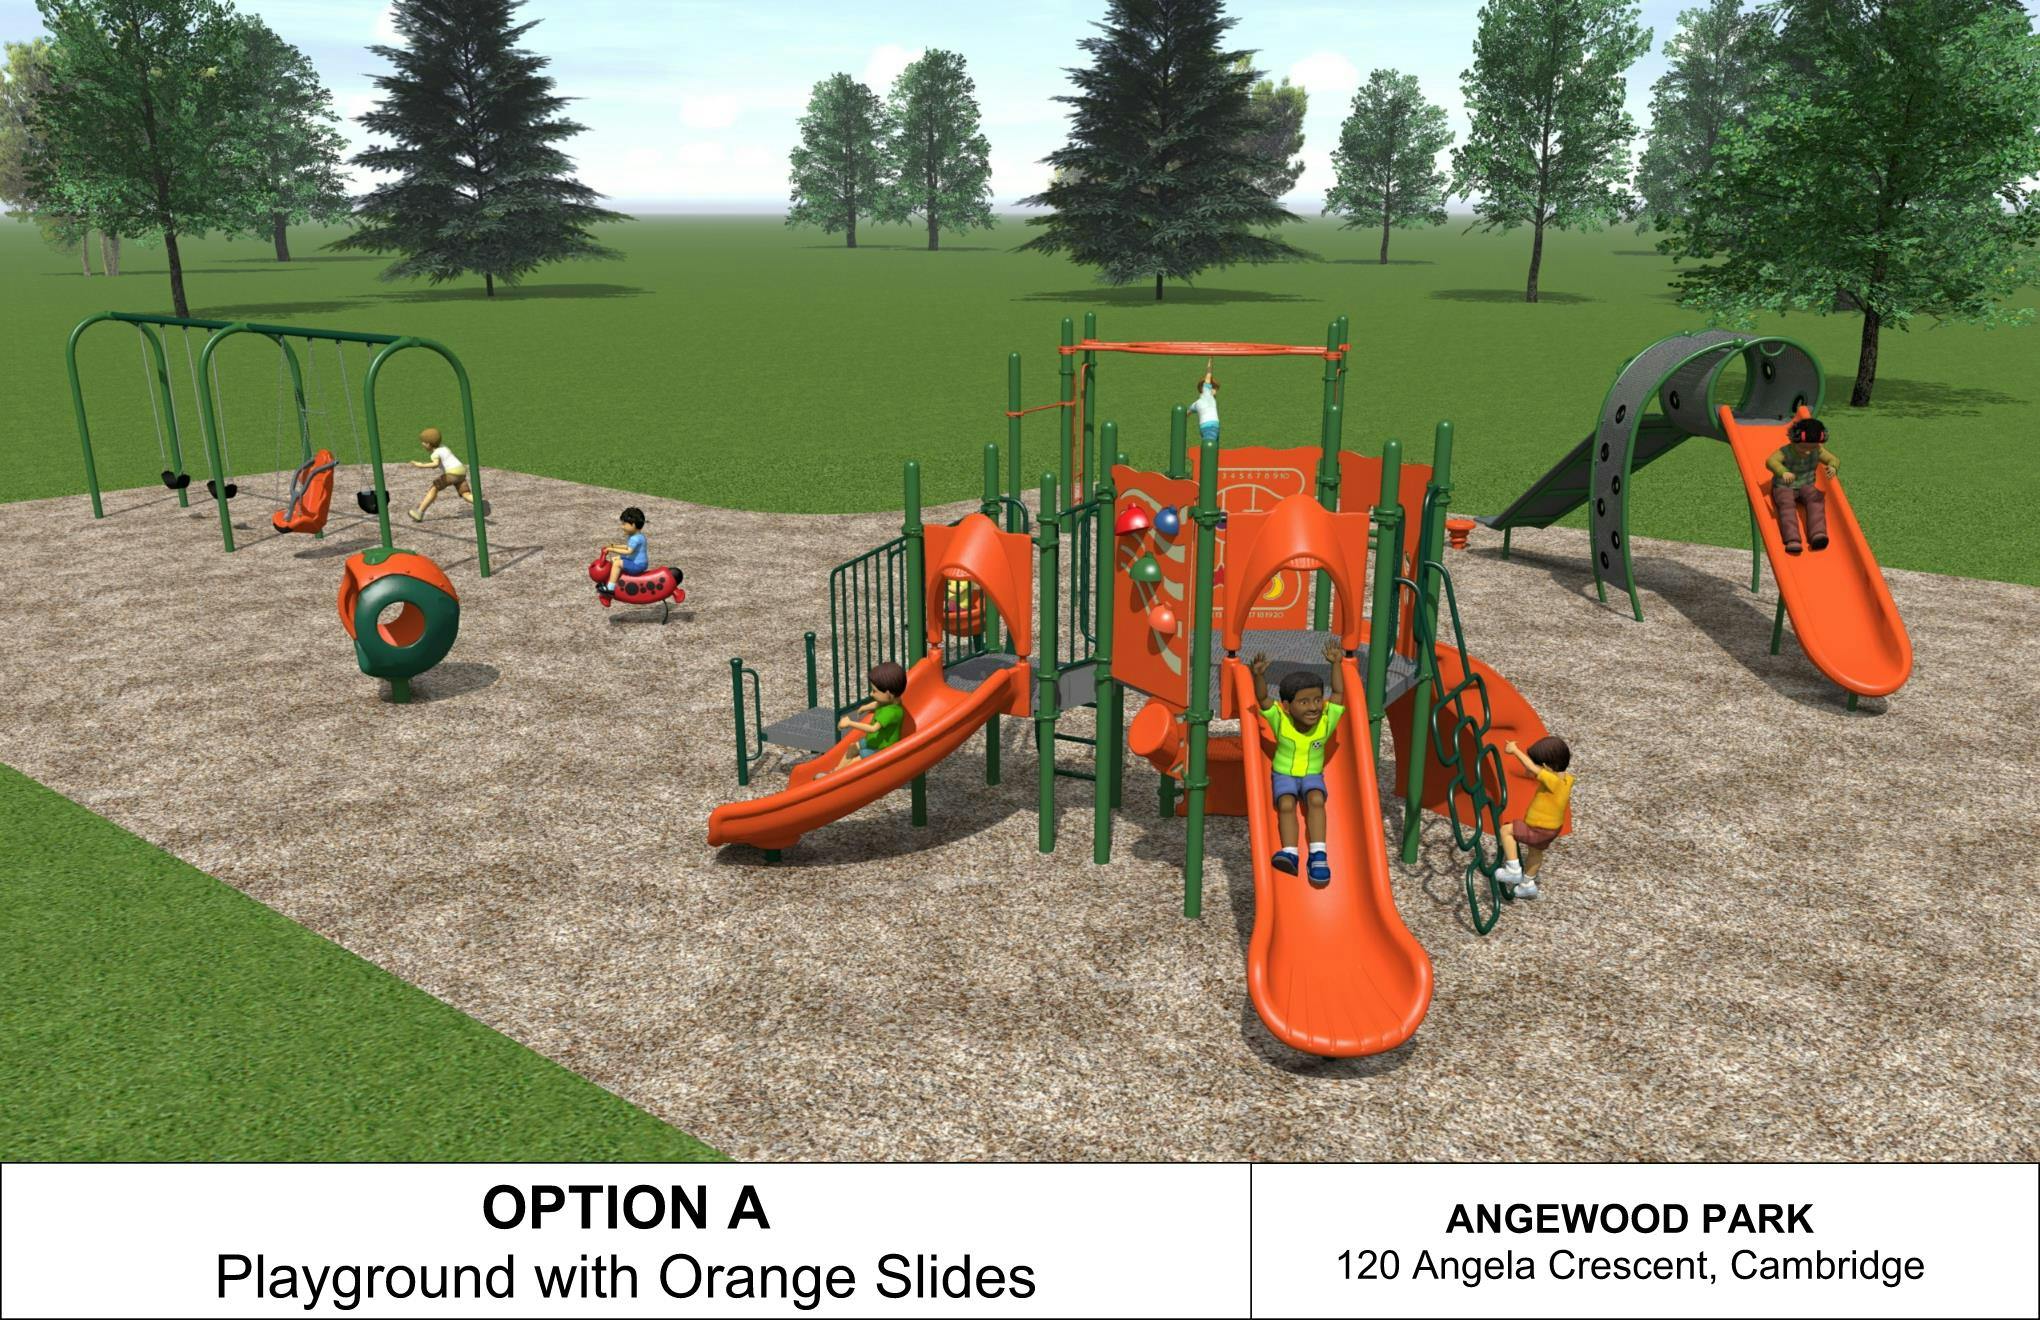 Option A - Playground with Orange Slides